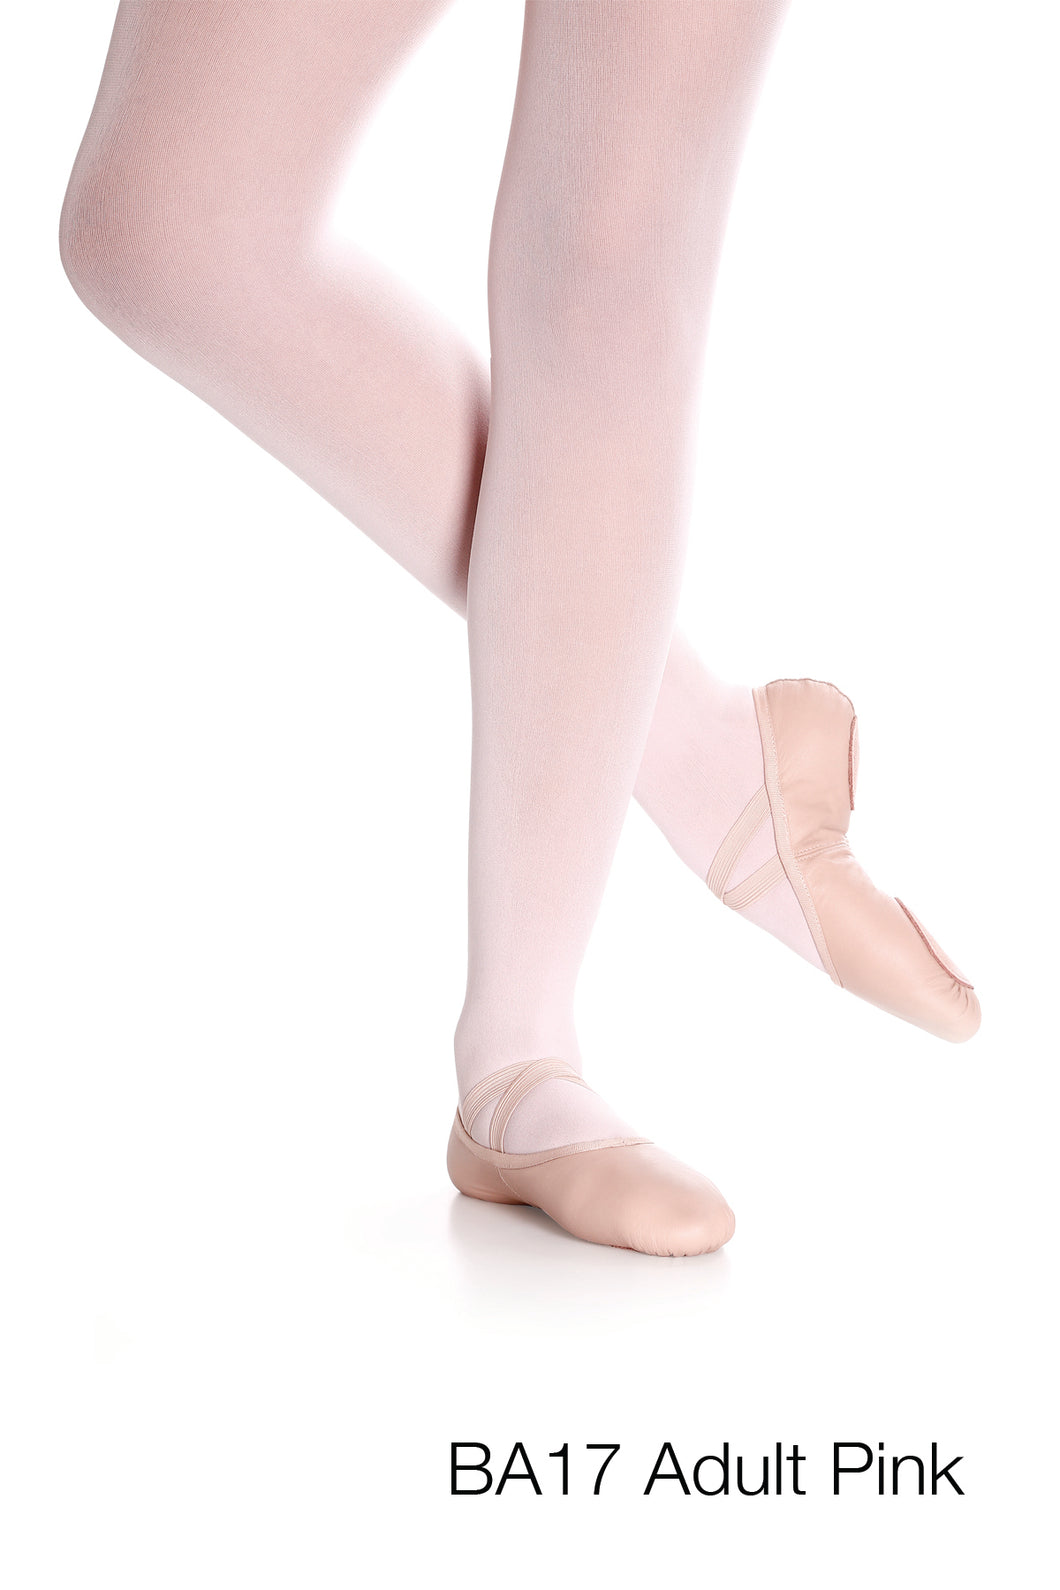 BA17 - Leather Split Sole Ballet Shoe - Adult